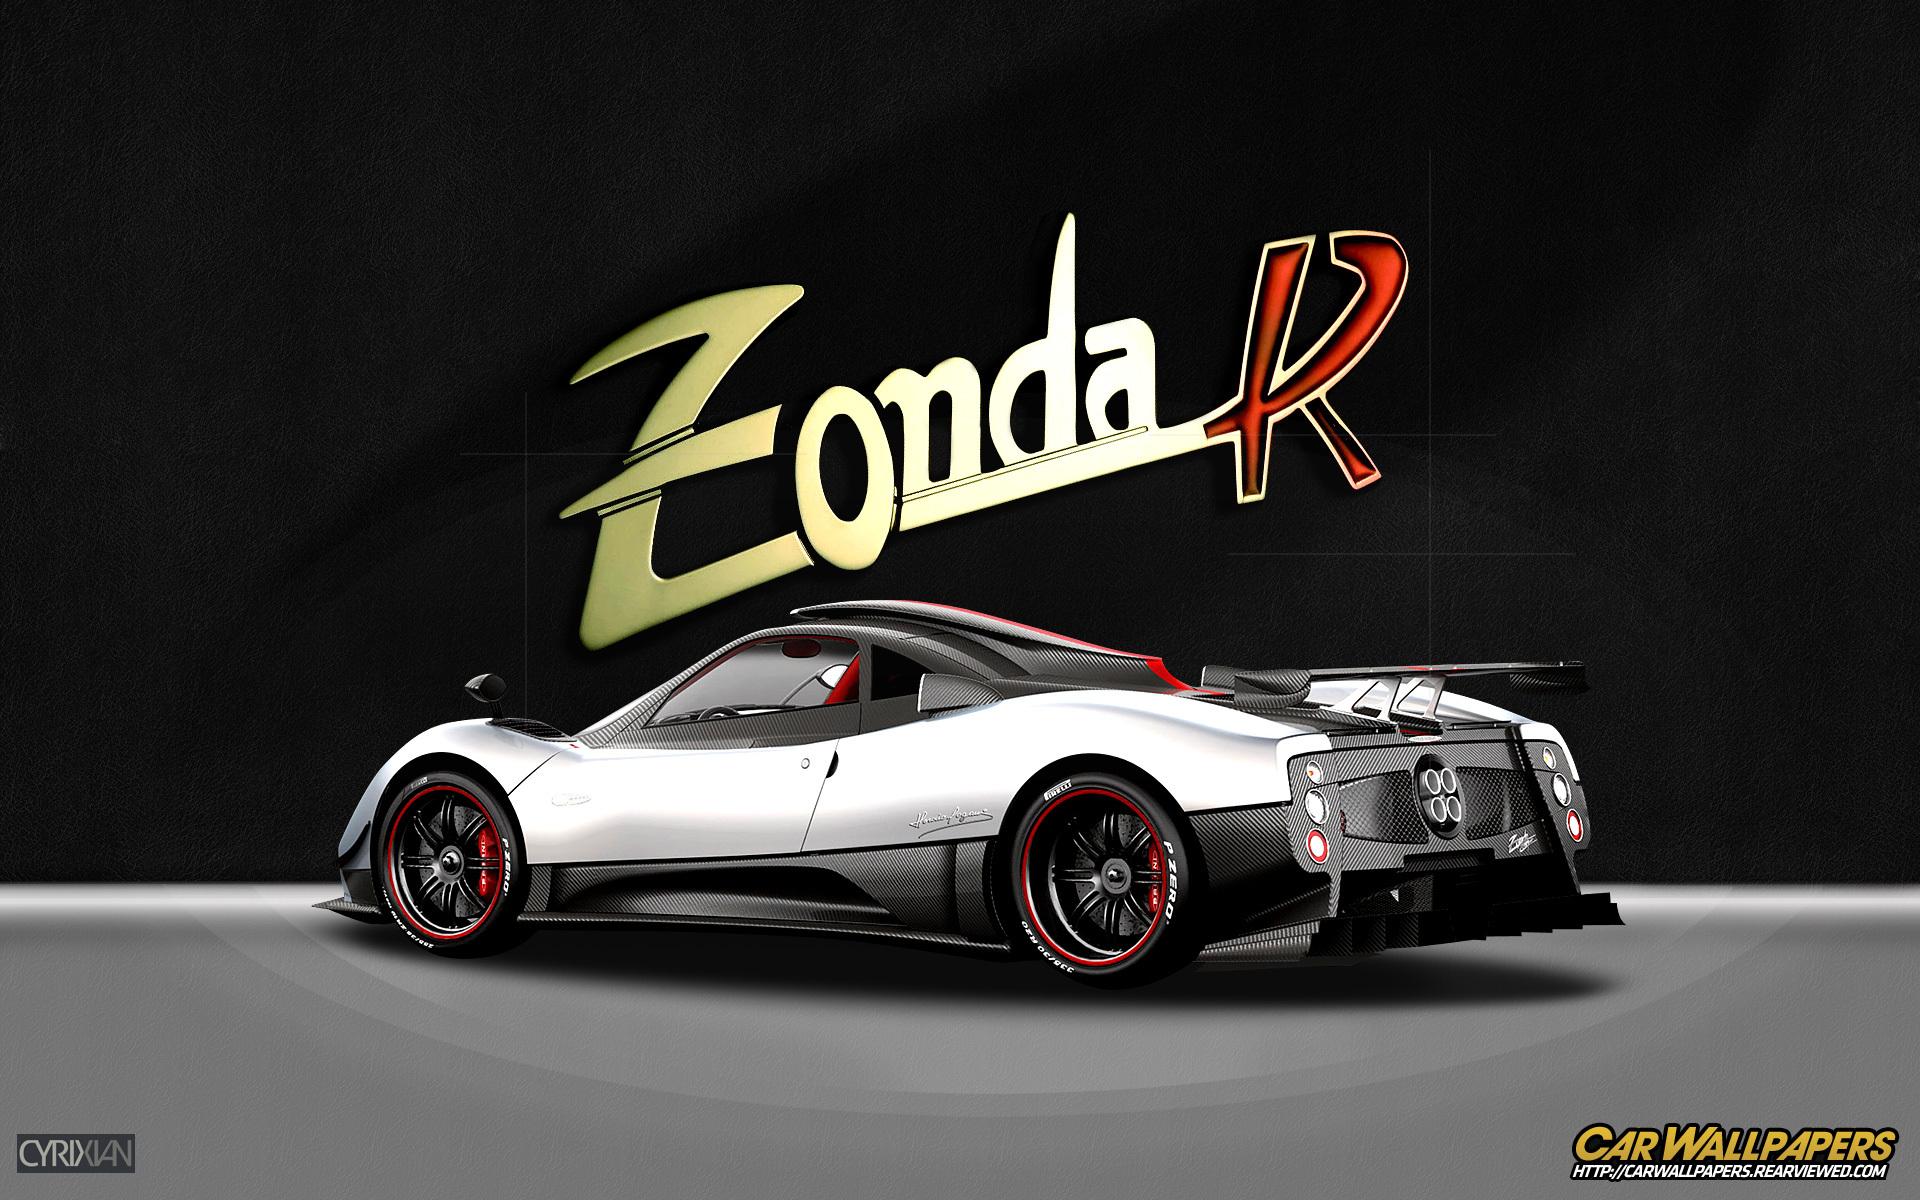 new car Pagani Zonda wallpaper and image, picture